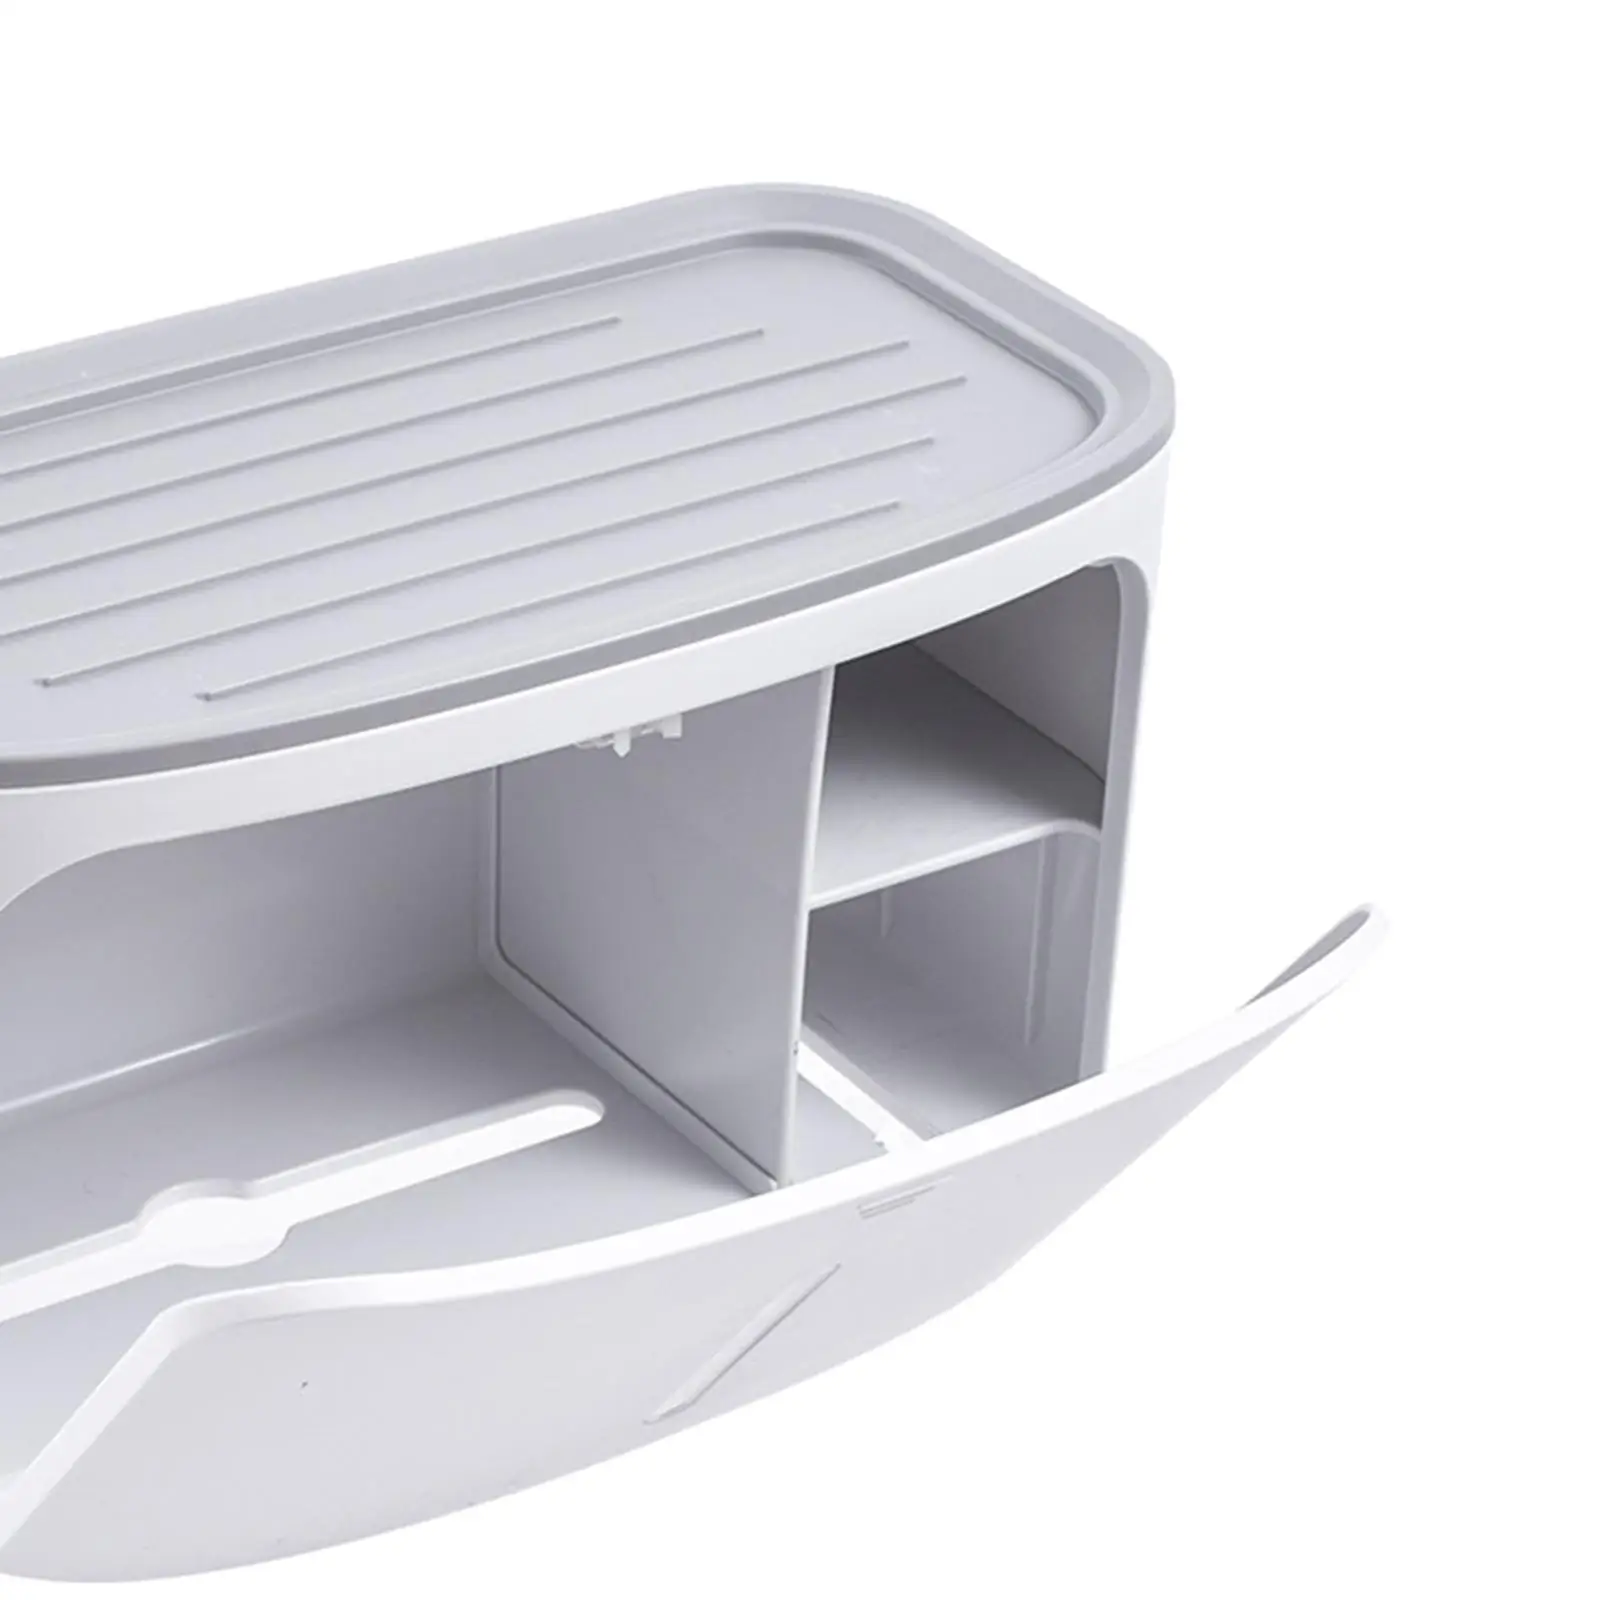 Toilet Paper Holder Rectangular Self Adhesive Tissue Box for Home Office